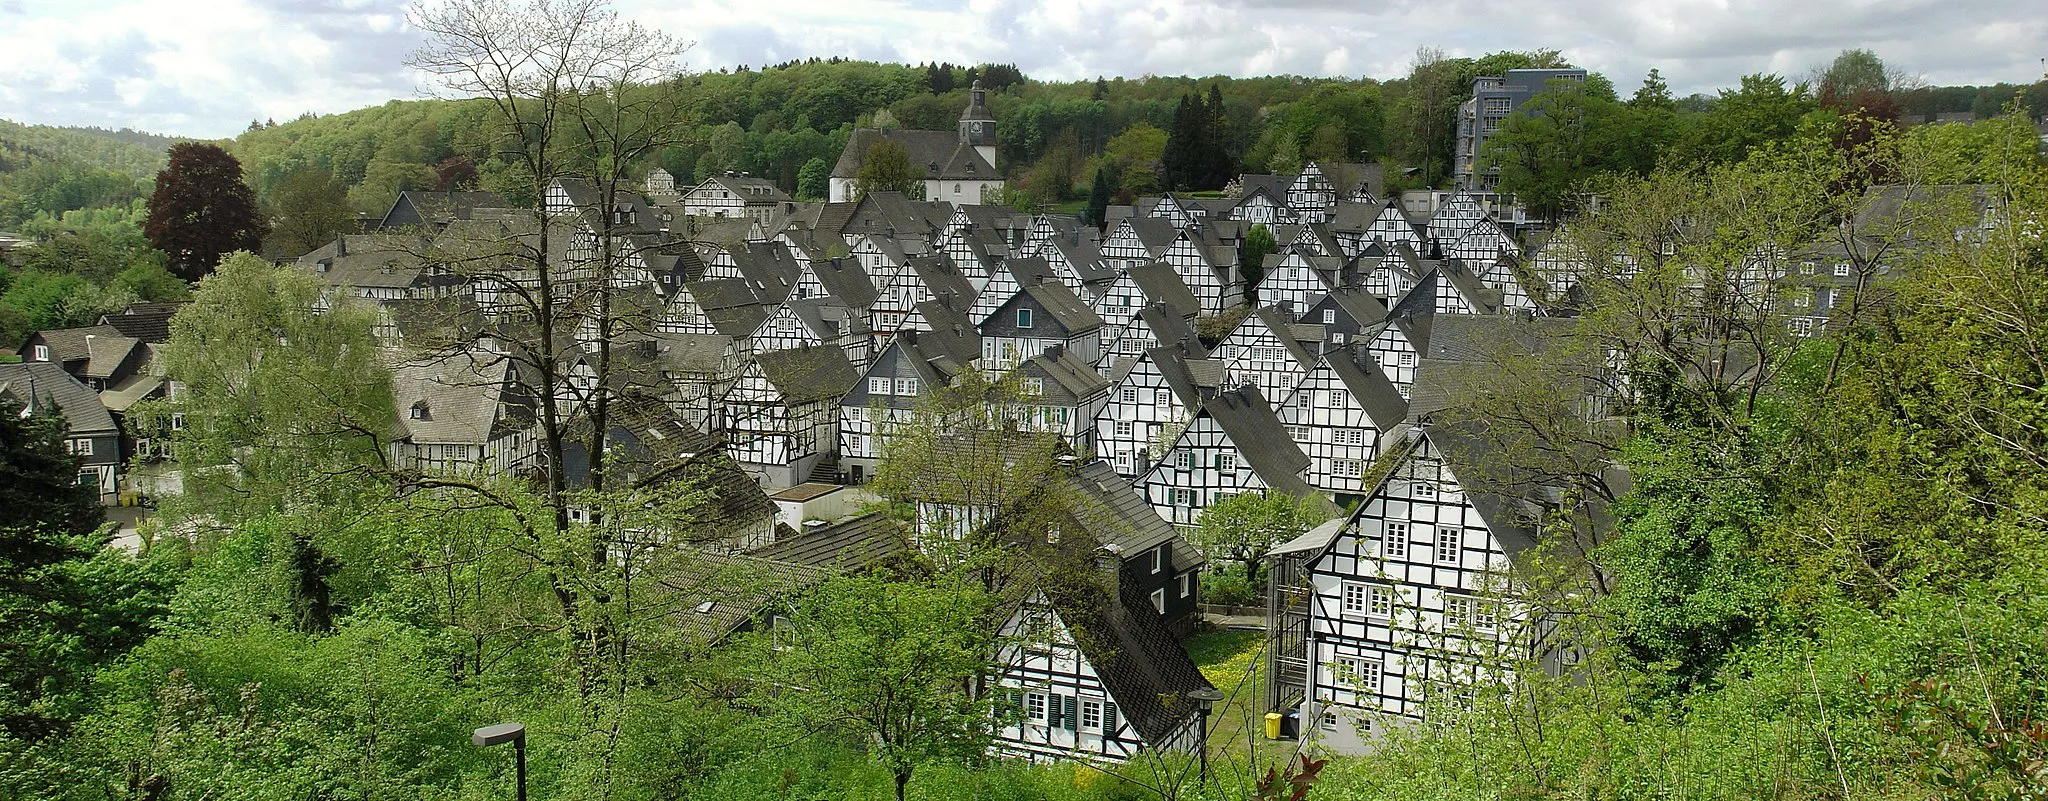 Photo showing: The historic town center "Alter Flecken" of Freudenberg